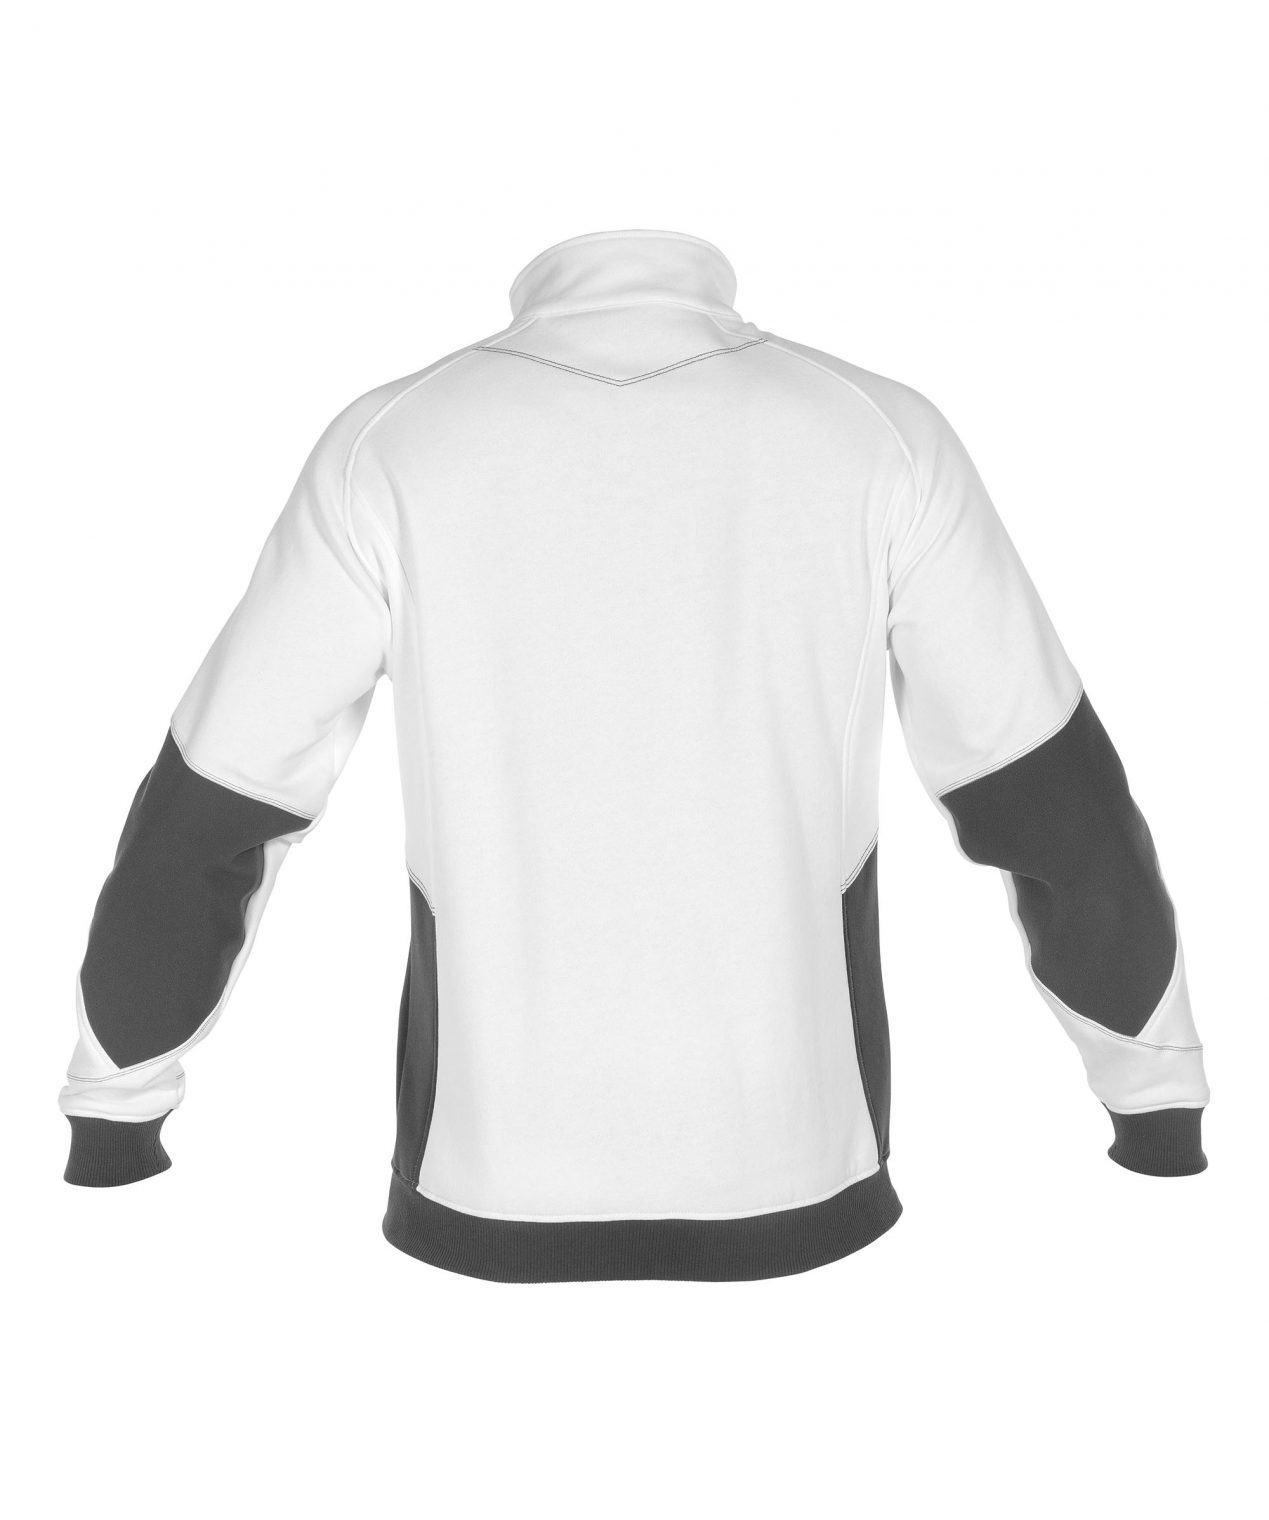 velox sweatshirt white anthracite grey back